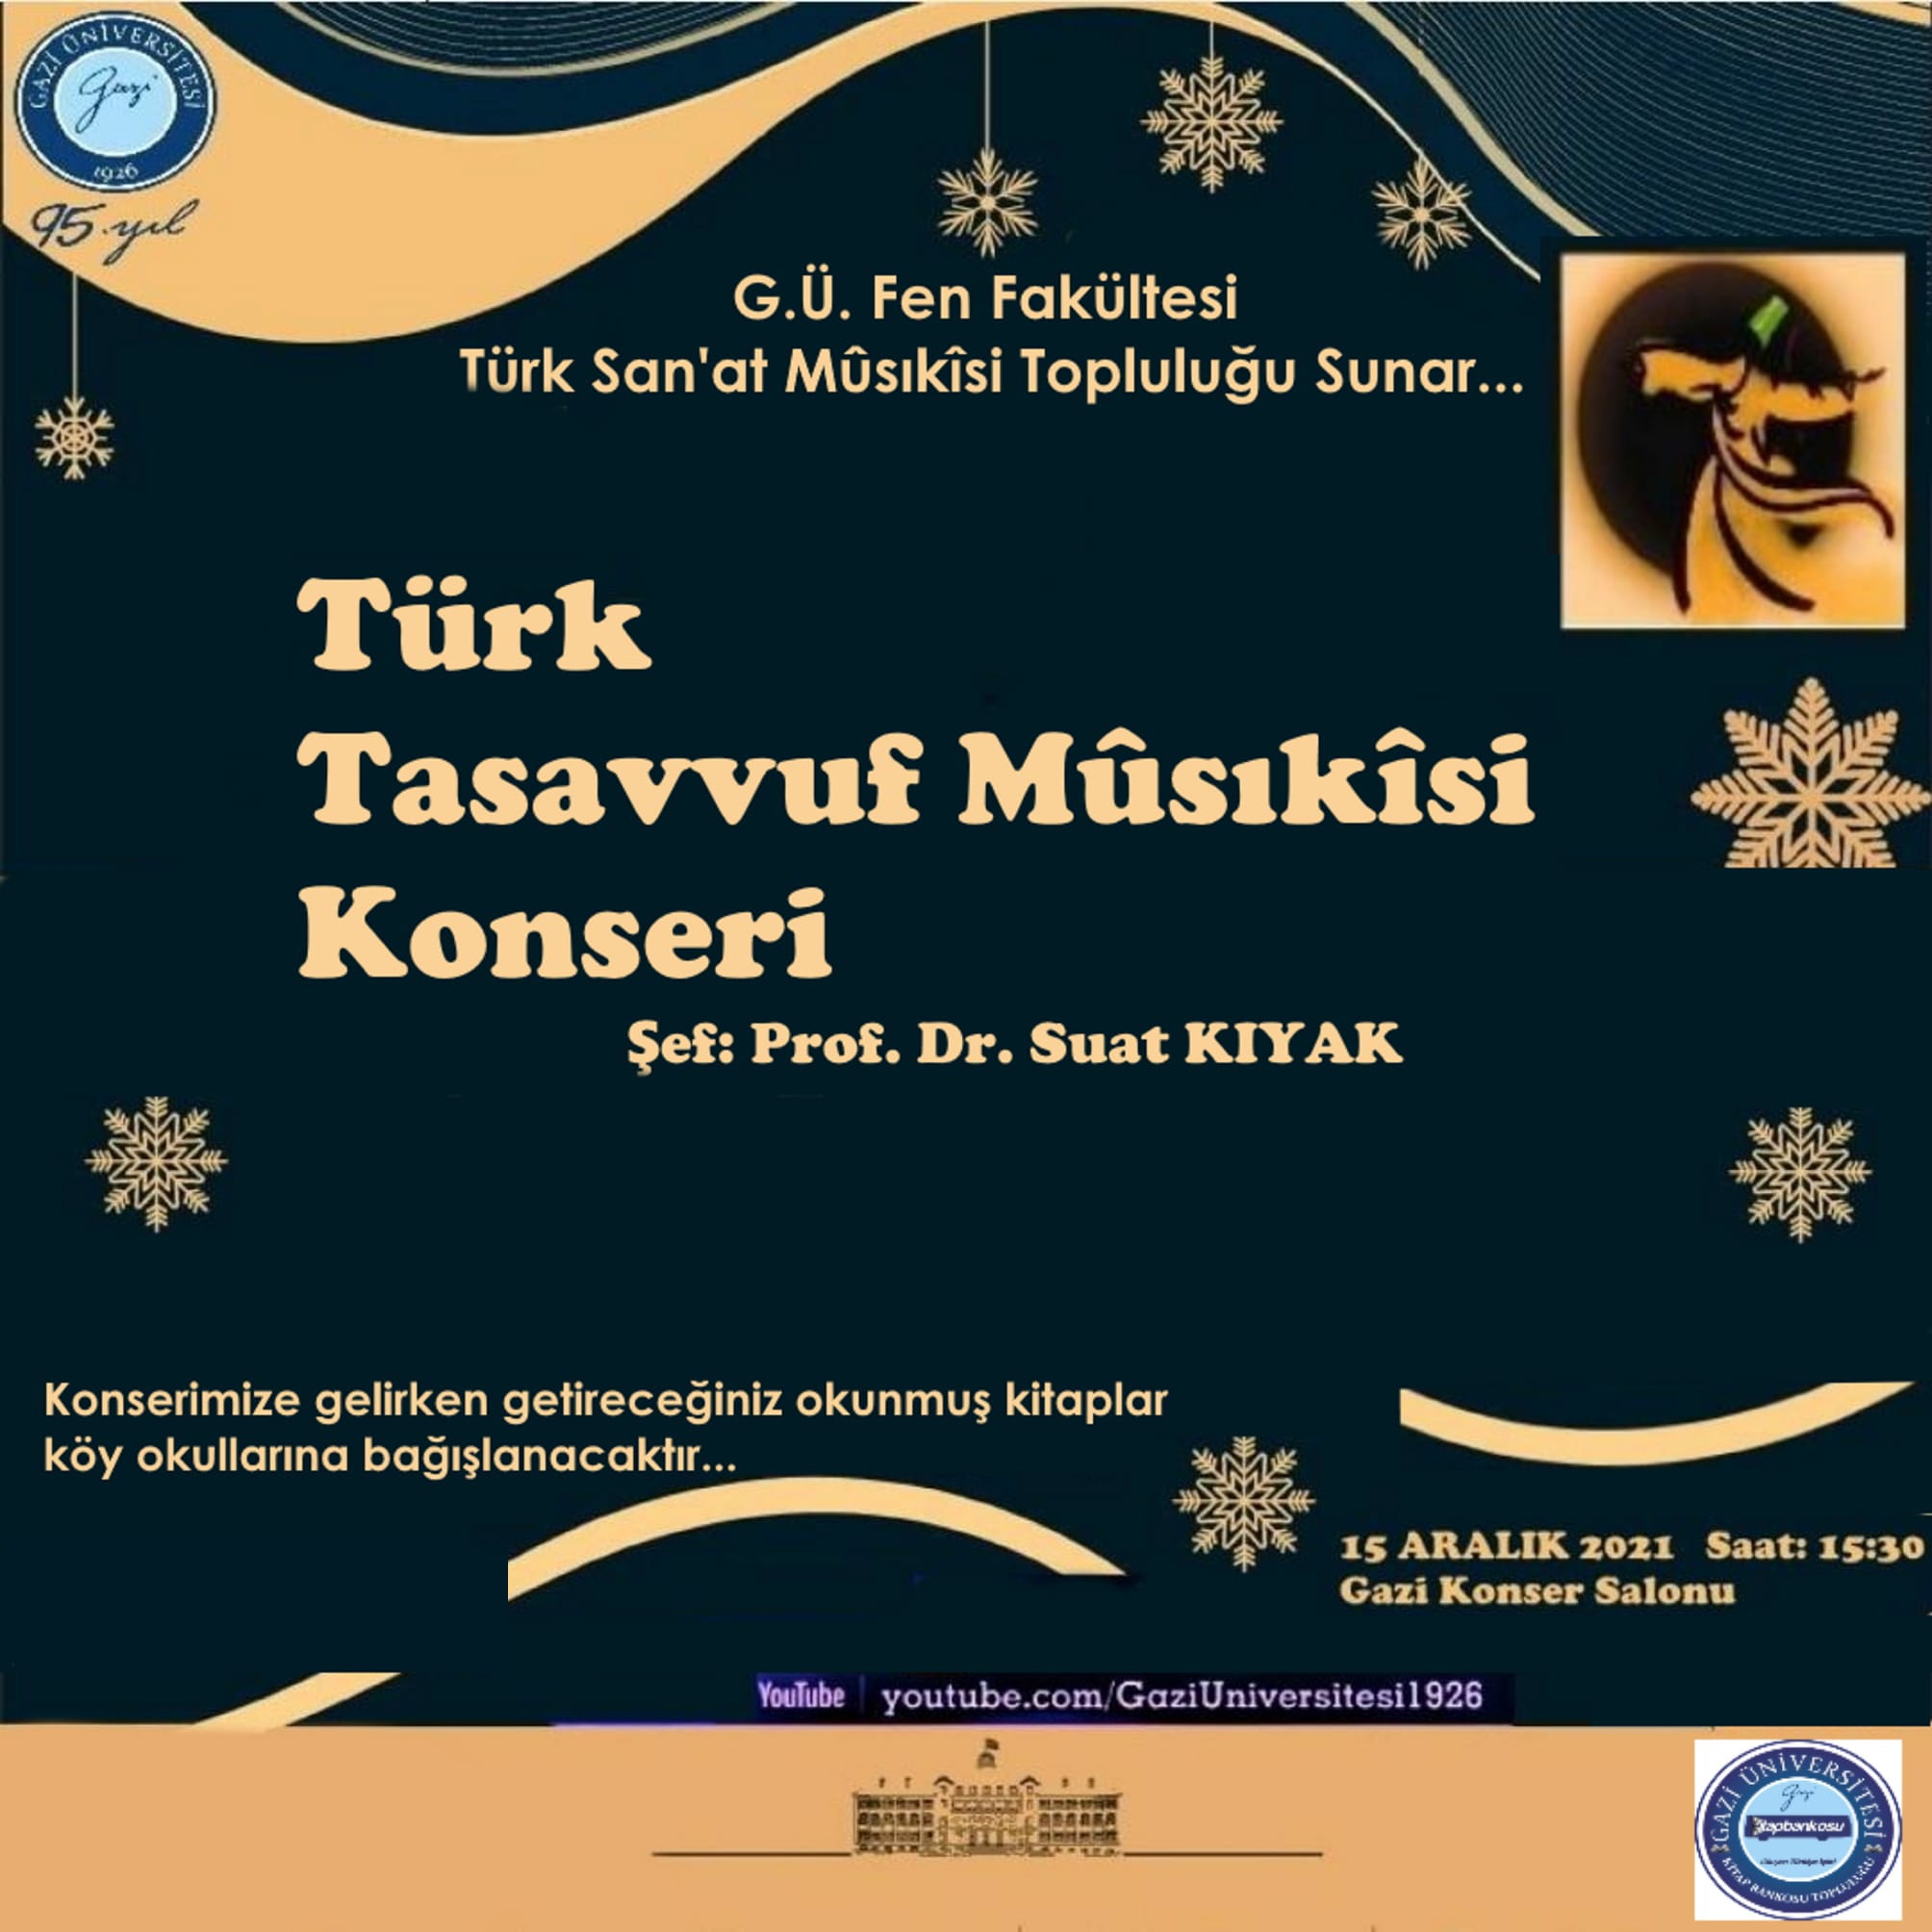 Türk Sanat Musikisi Topluluğu